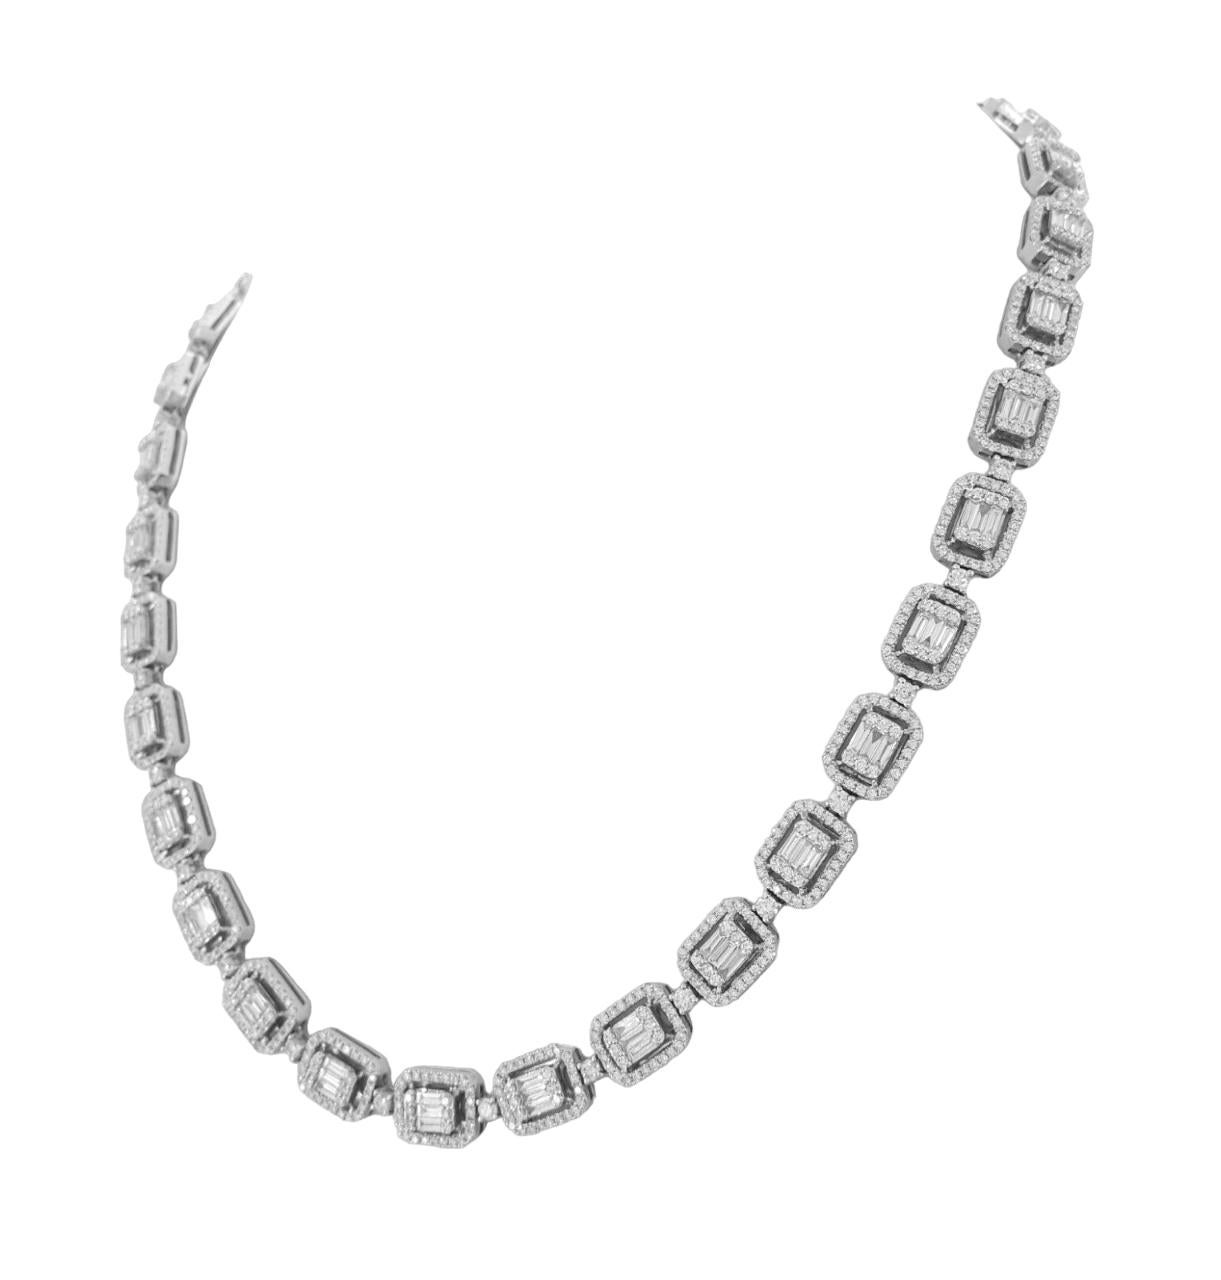 9 carat tennis necklace